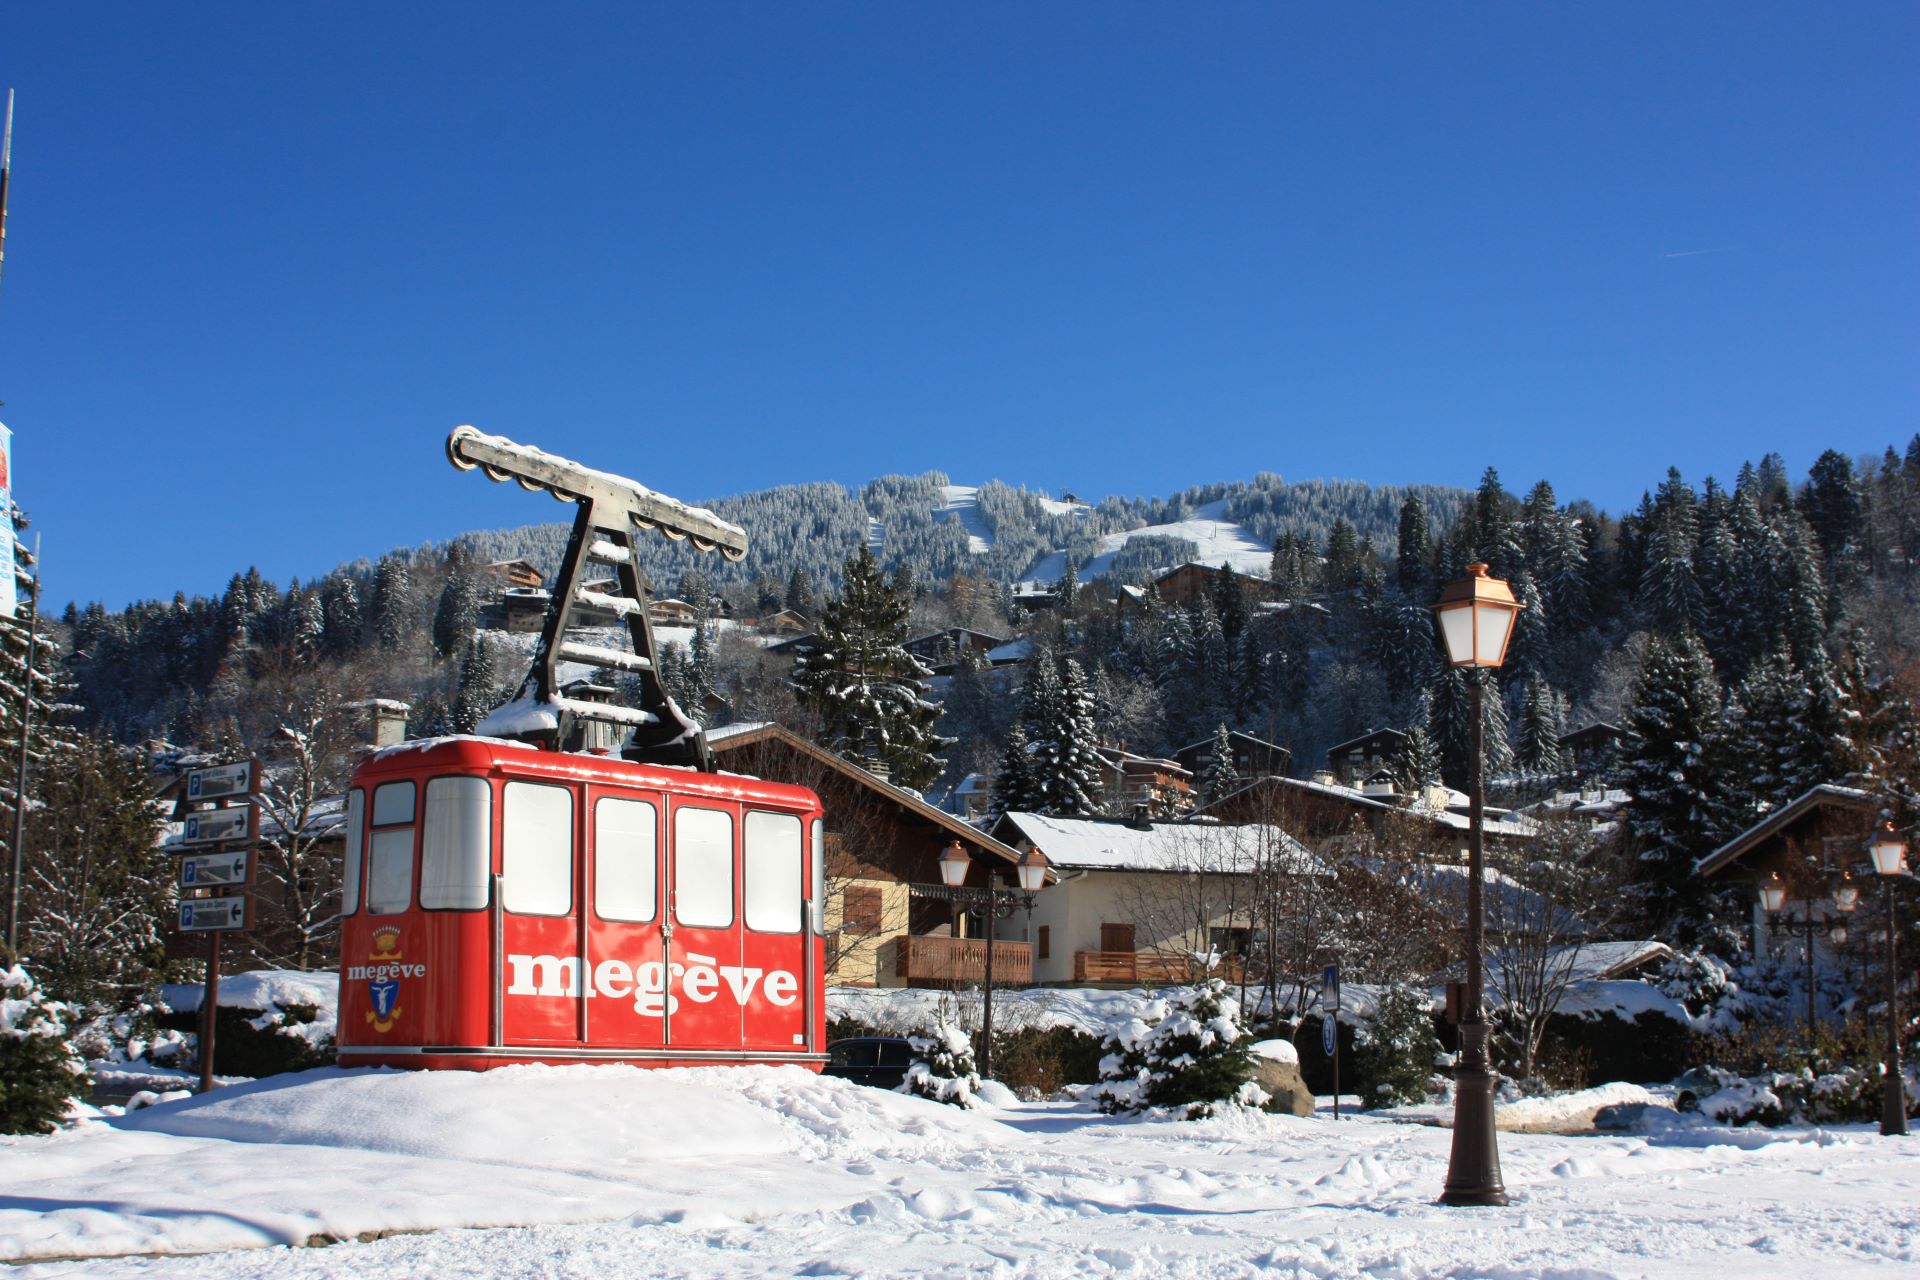 Station Megeve-station-de-ski-village-montange-alpes-oxygene-ski-collection  